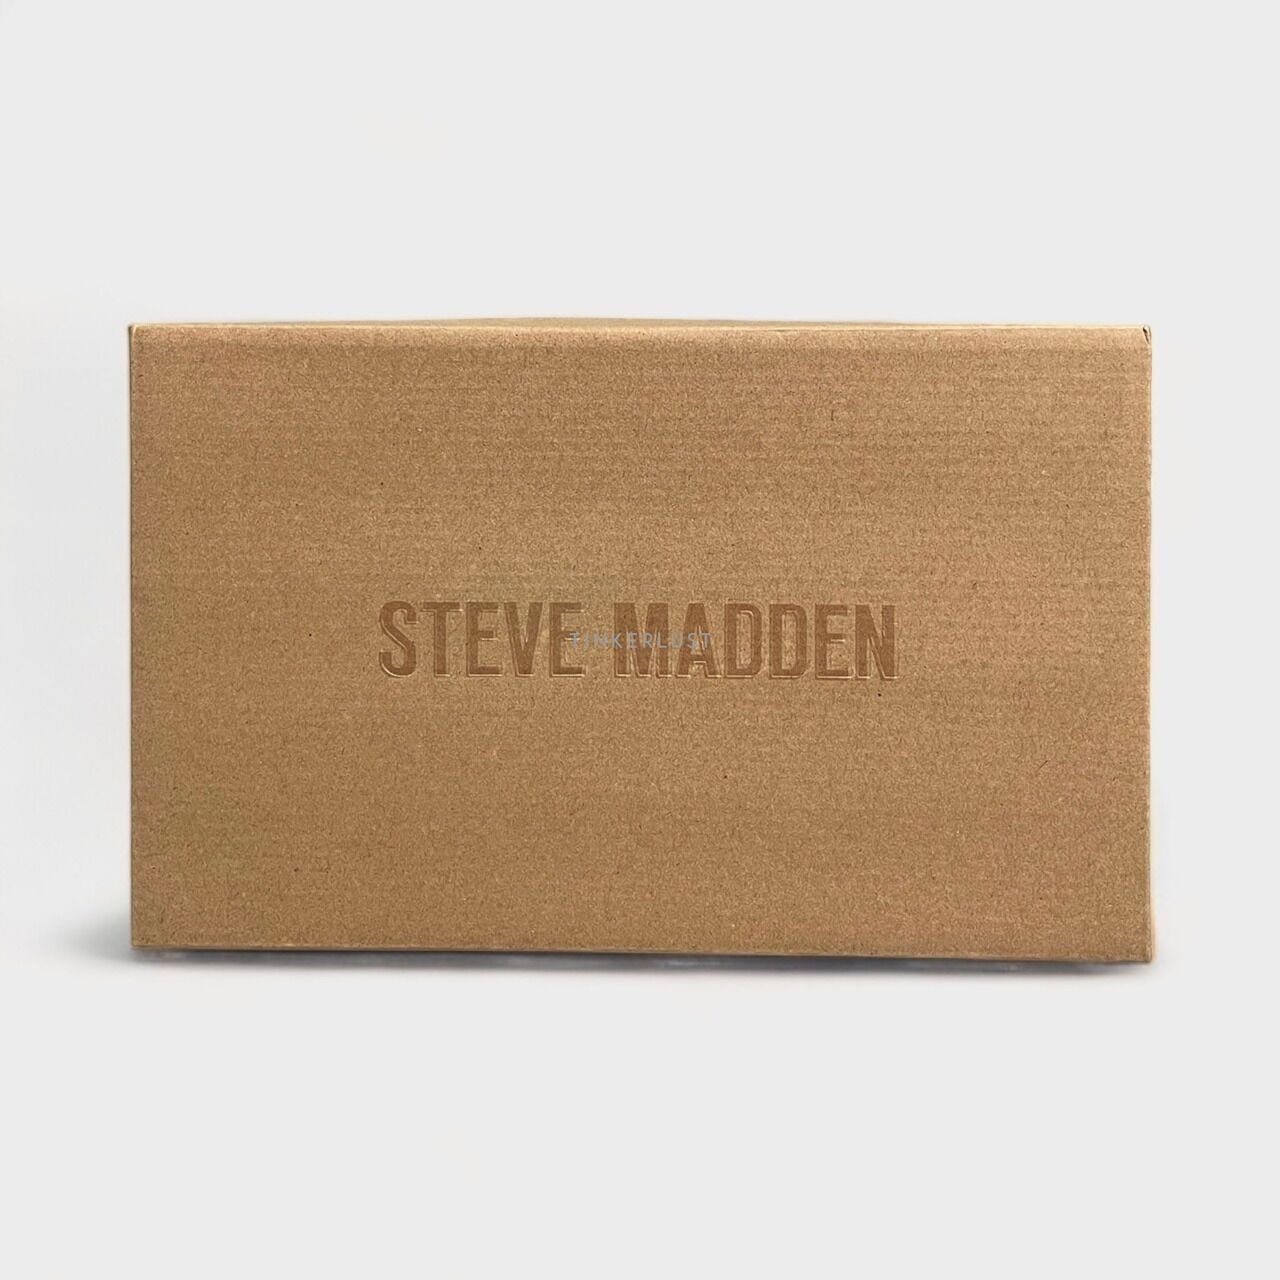 Steve Madden Black Crystal Heels